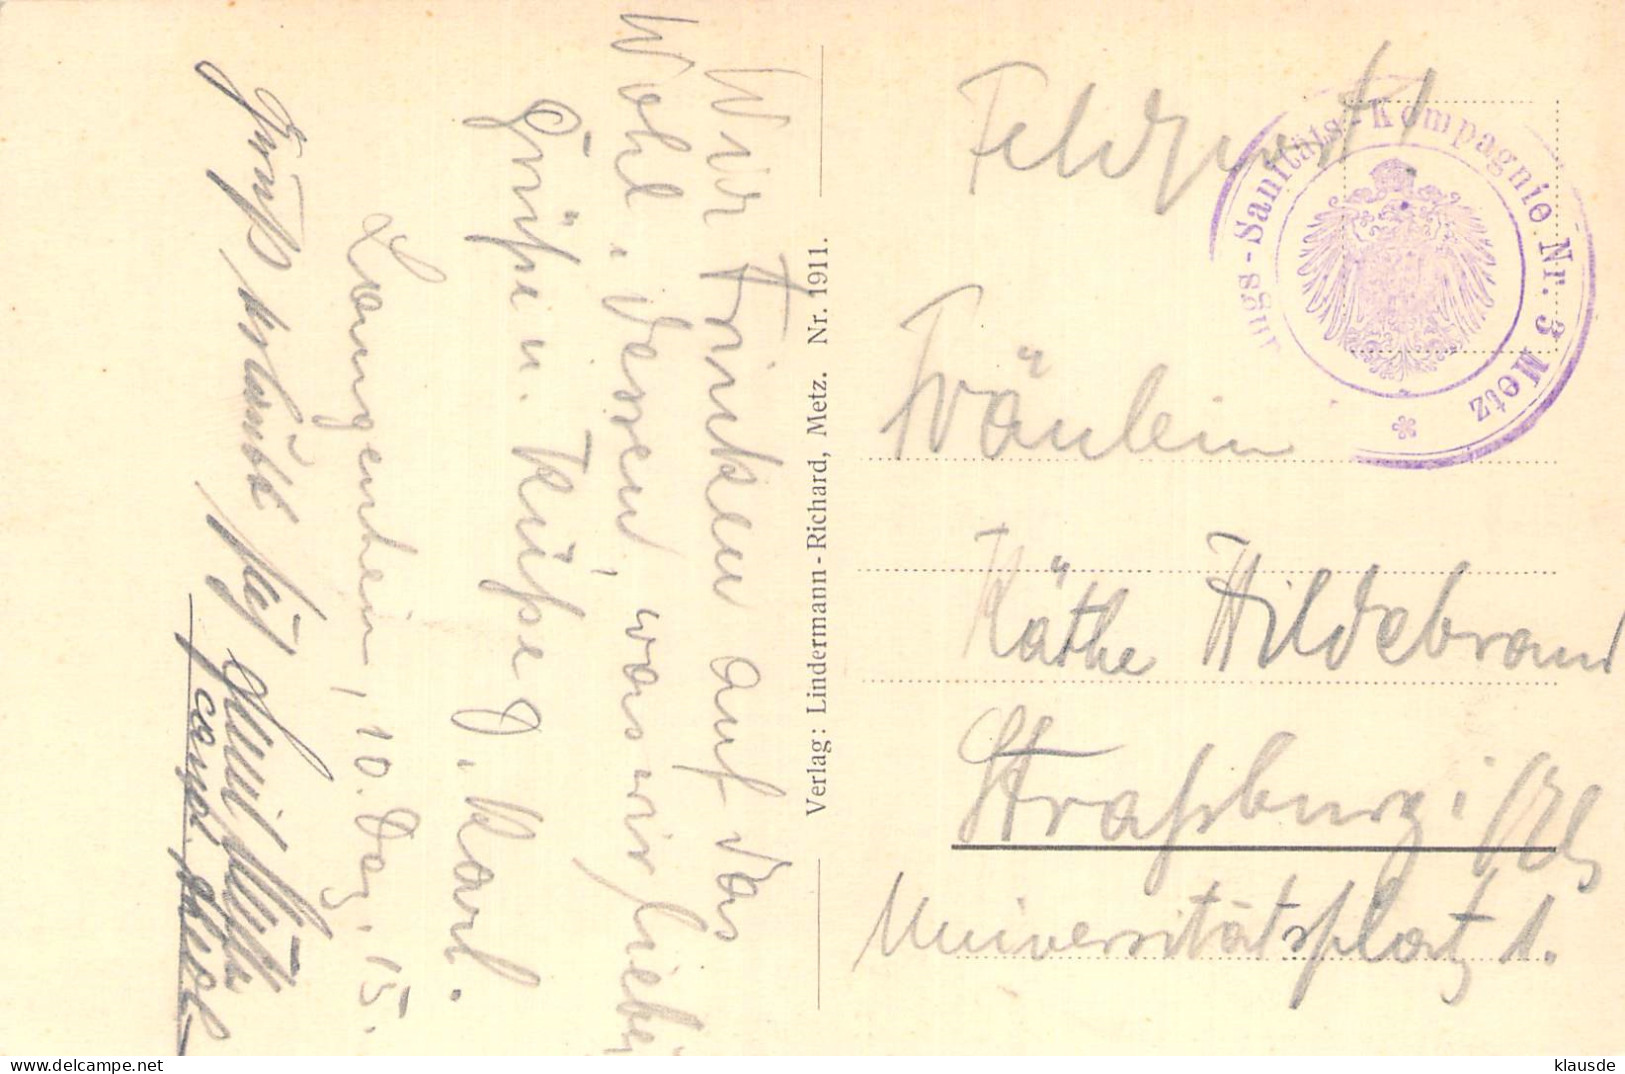 Metz - Römische Bäder Feldpost 1915 - Lothringen